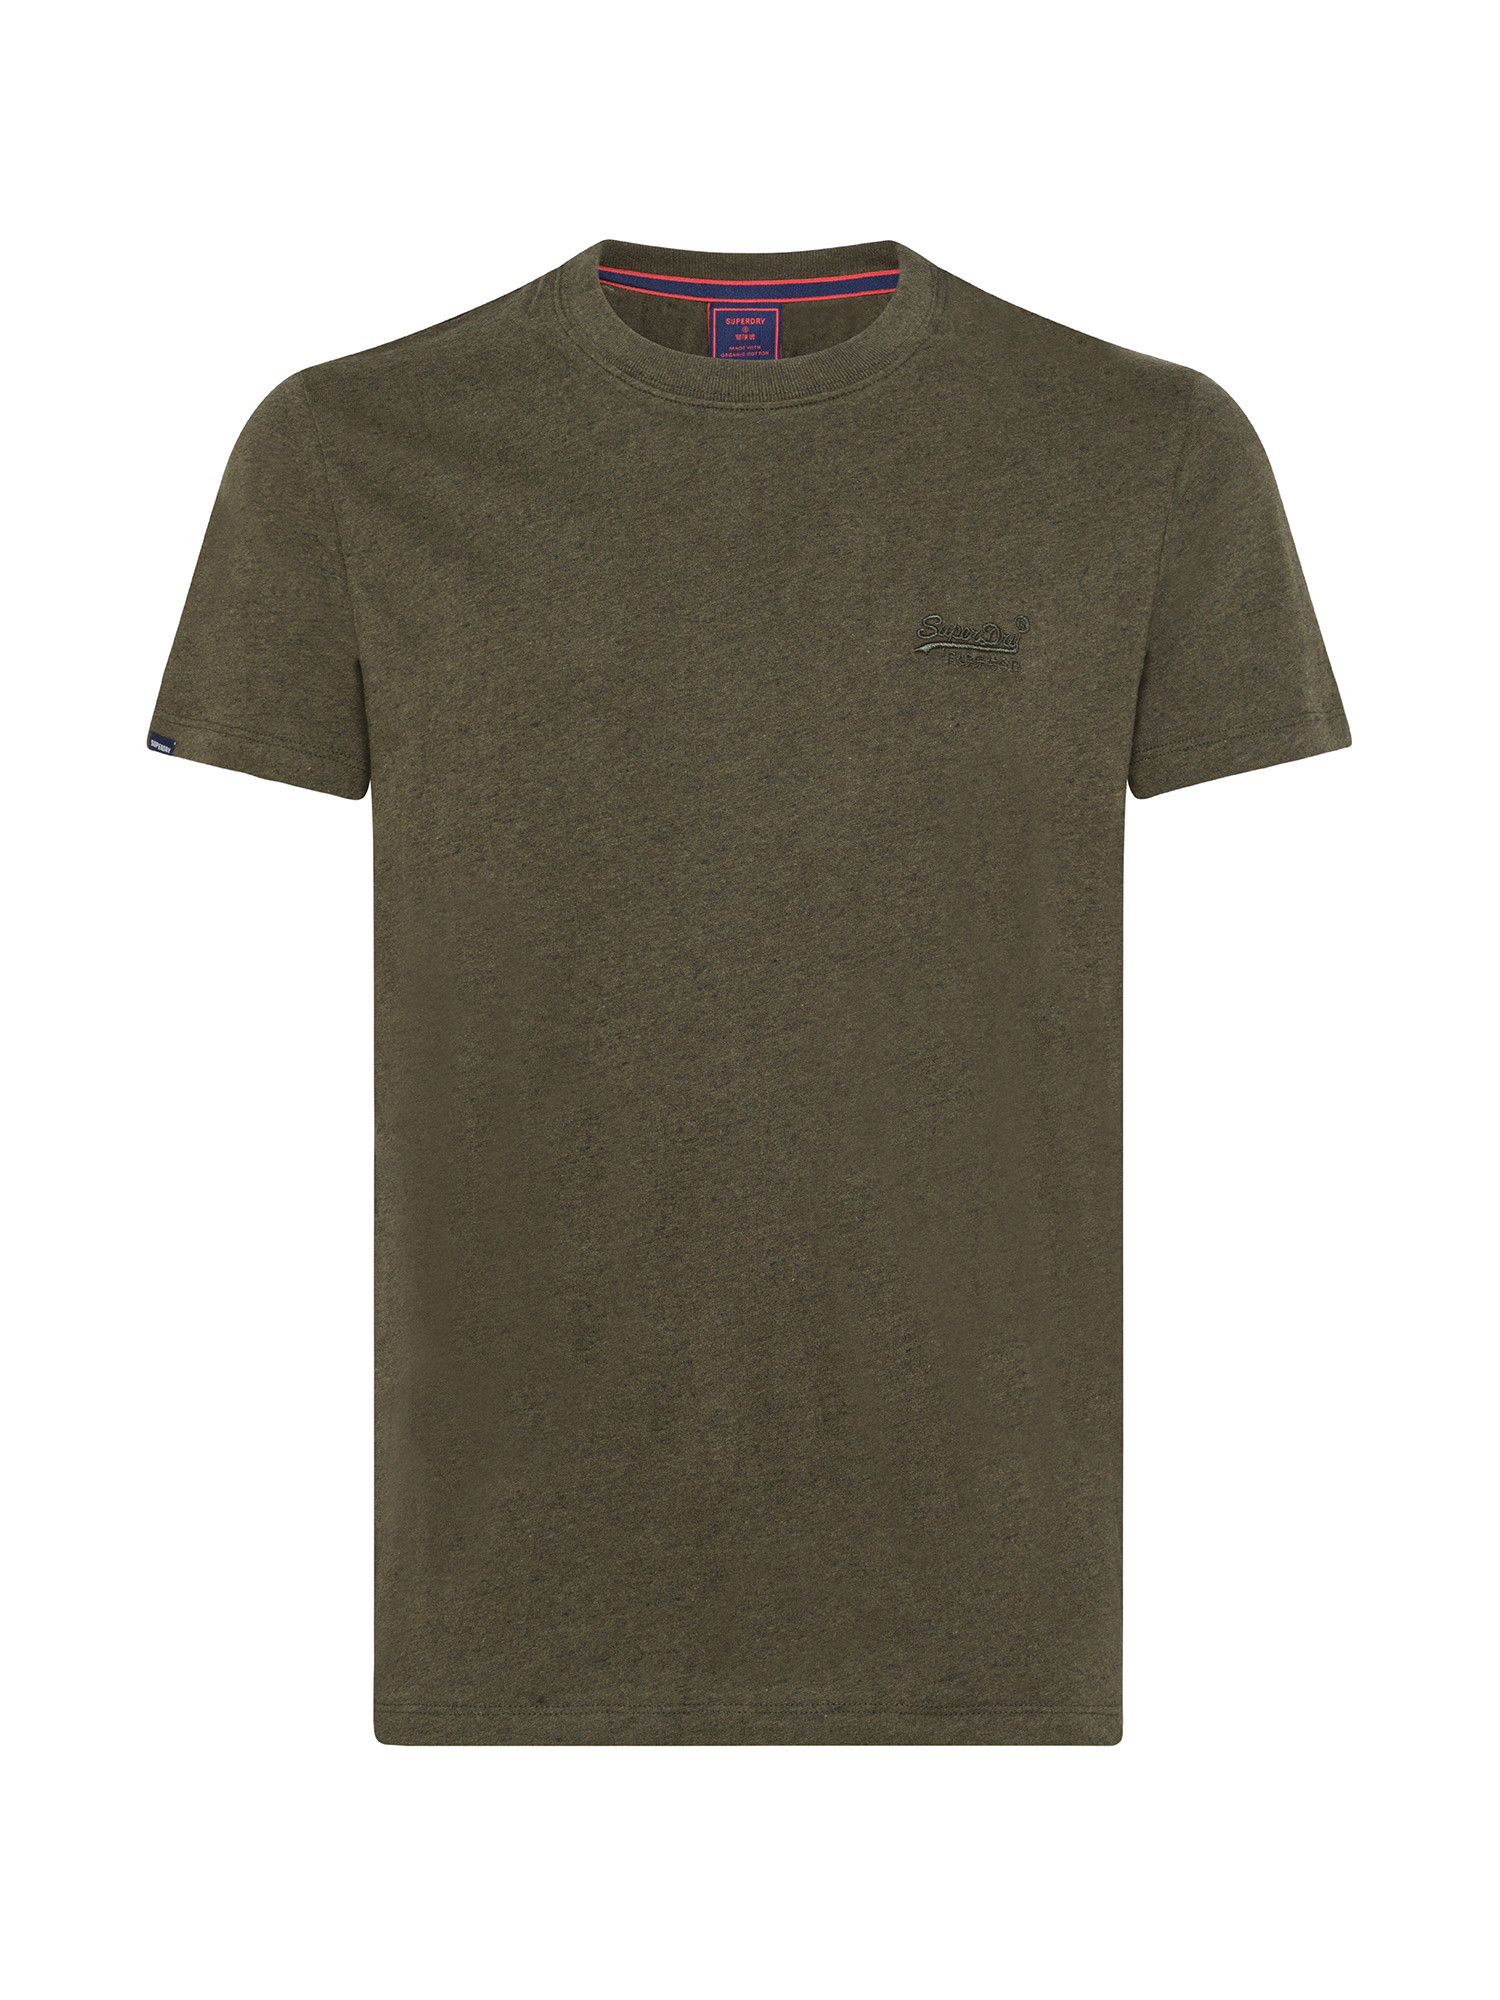 Superdry - T-shirt con logo ricamato, Verde oliva, large image number 0